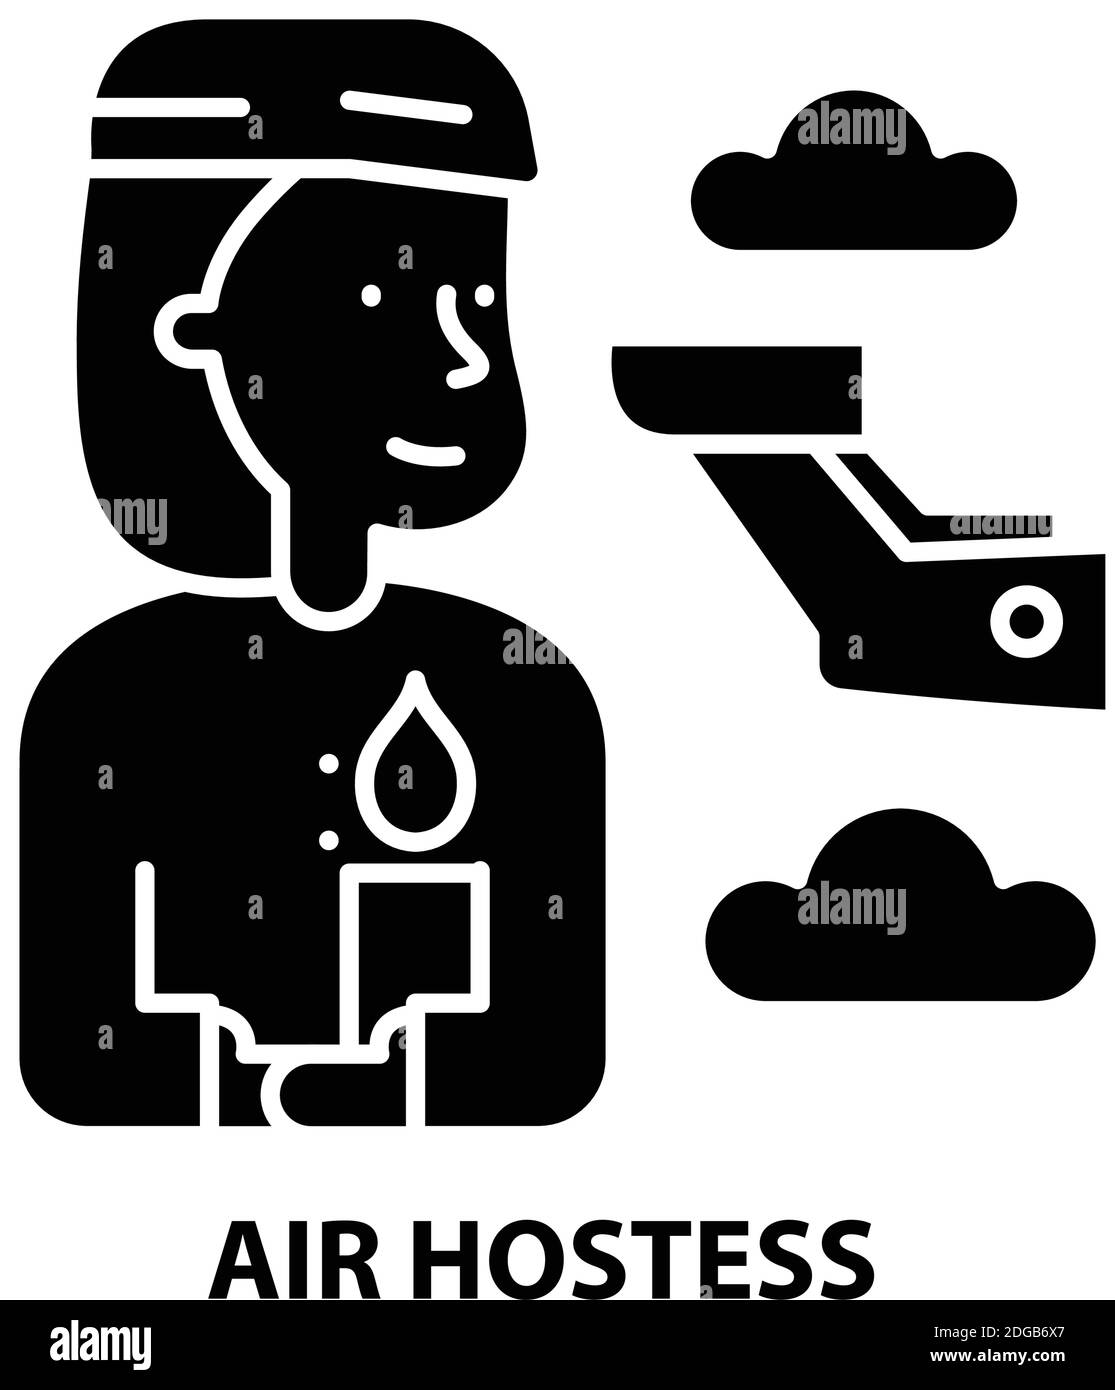 air hostess icon, black vector sign with editable strokes, concept illustration Stock Vector